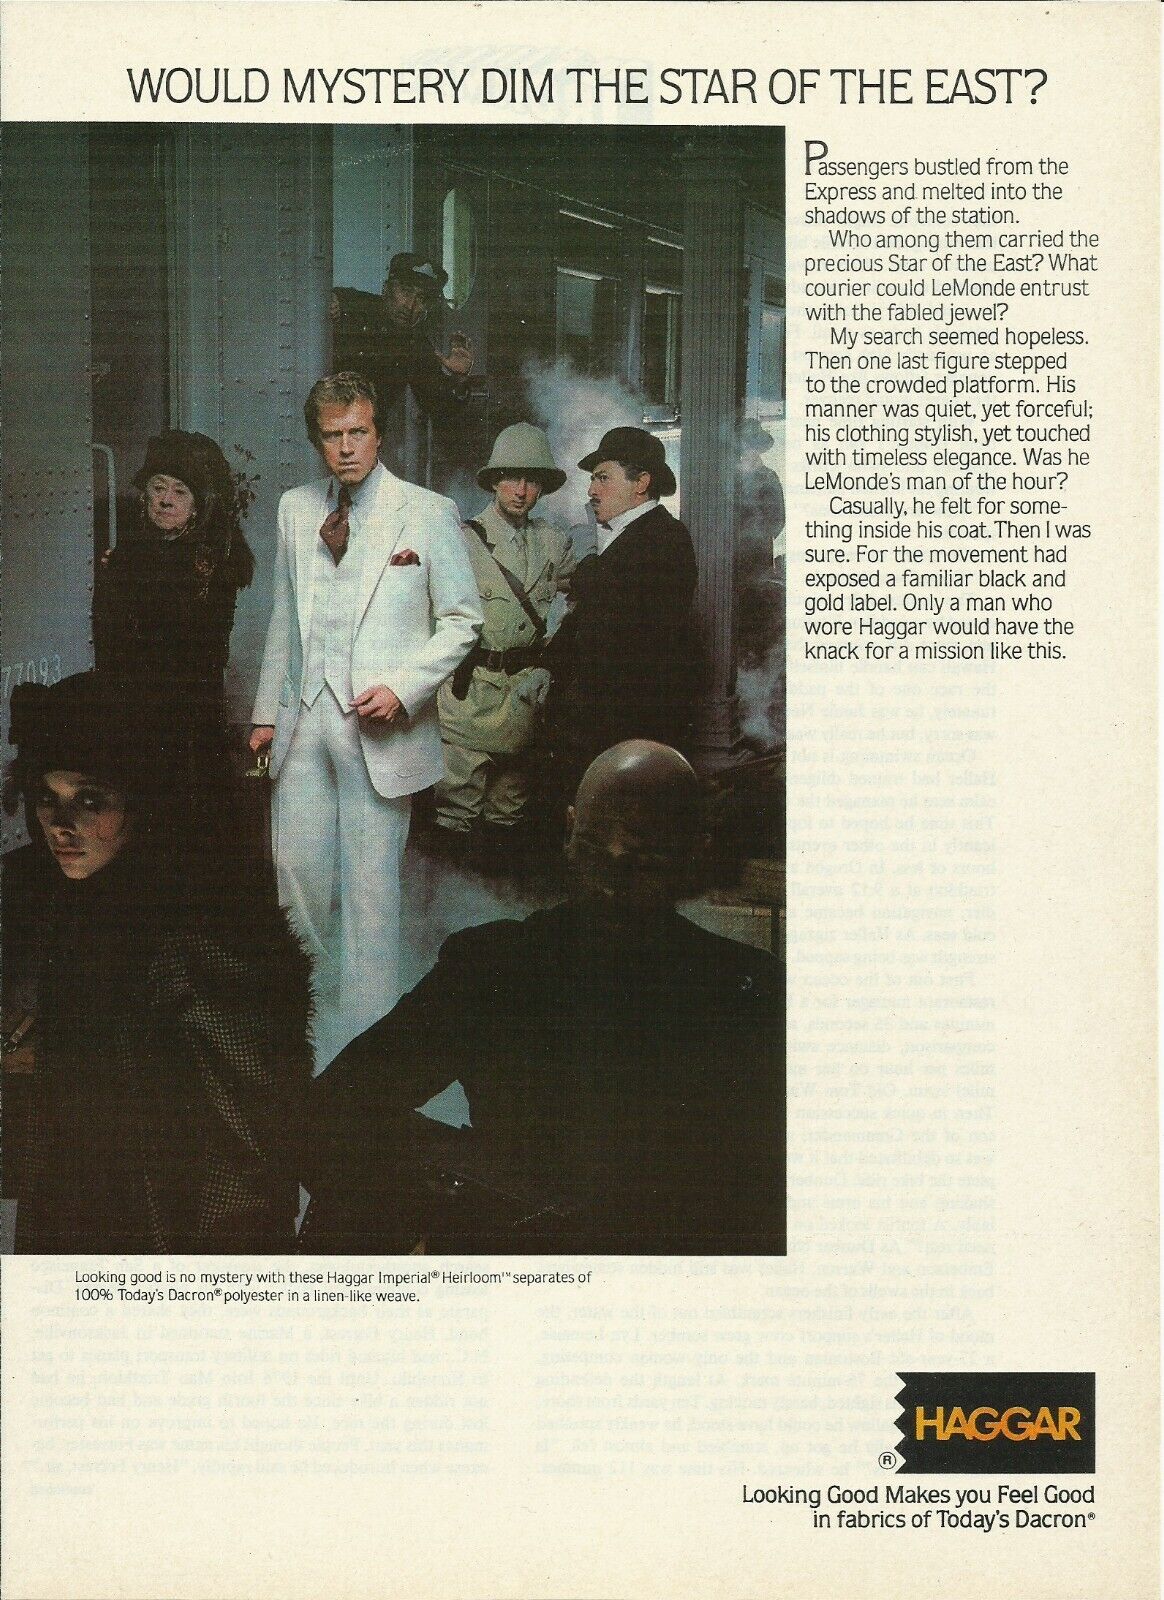 1979 Haggar Imperial Heirloom Suit Fashion vintage print ad 70's advertisement